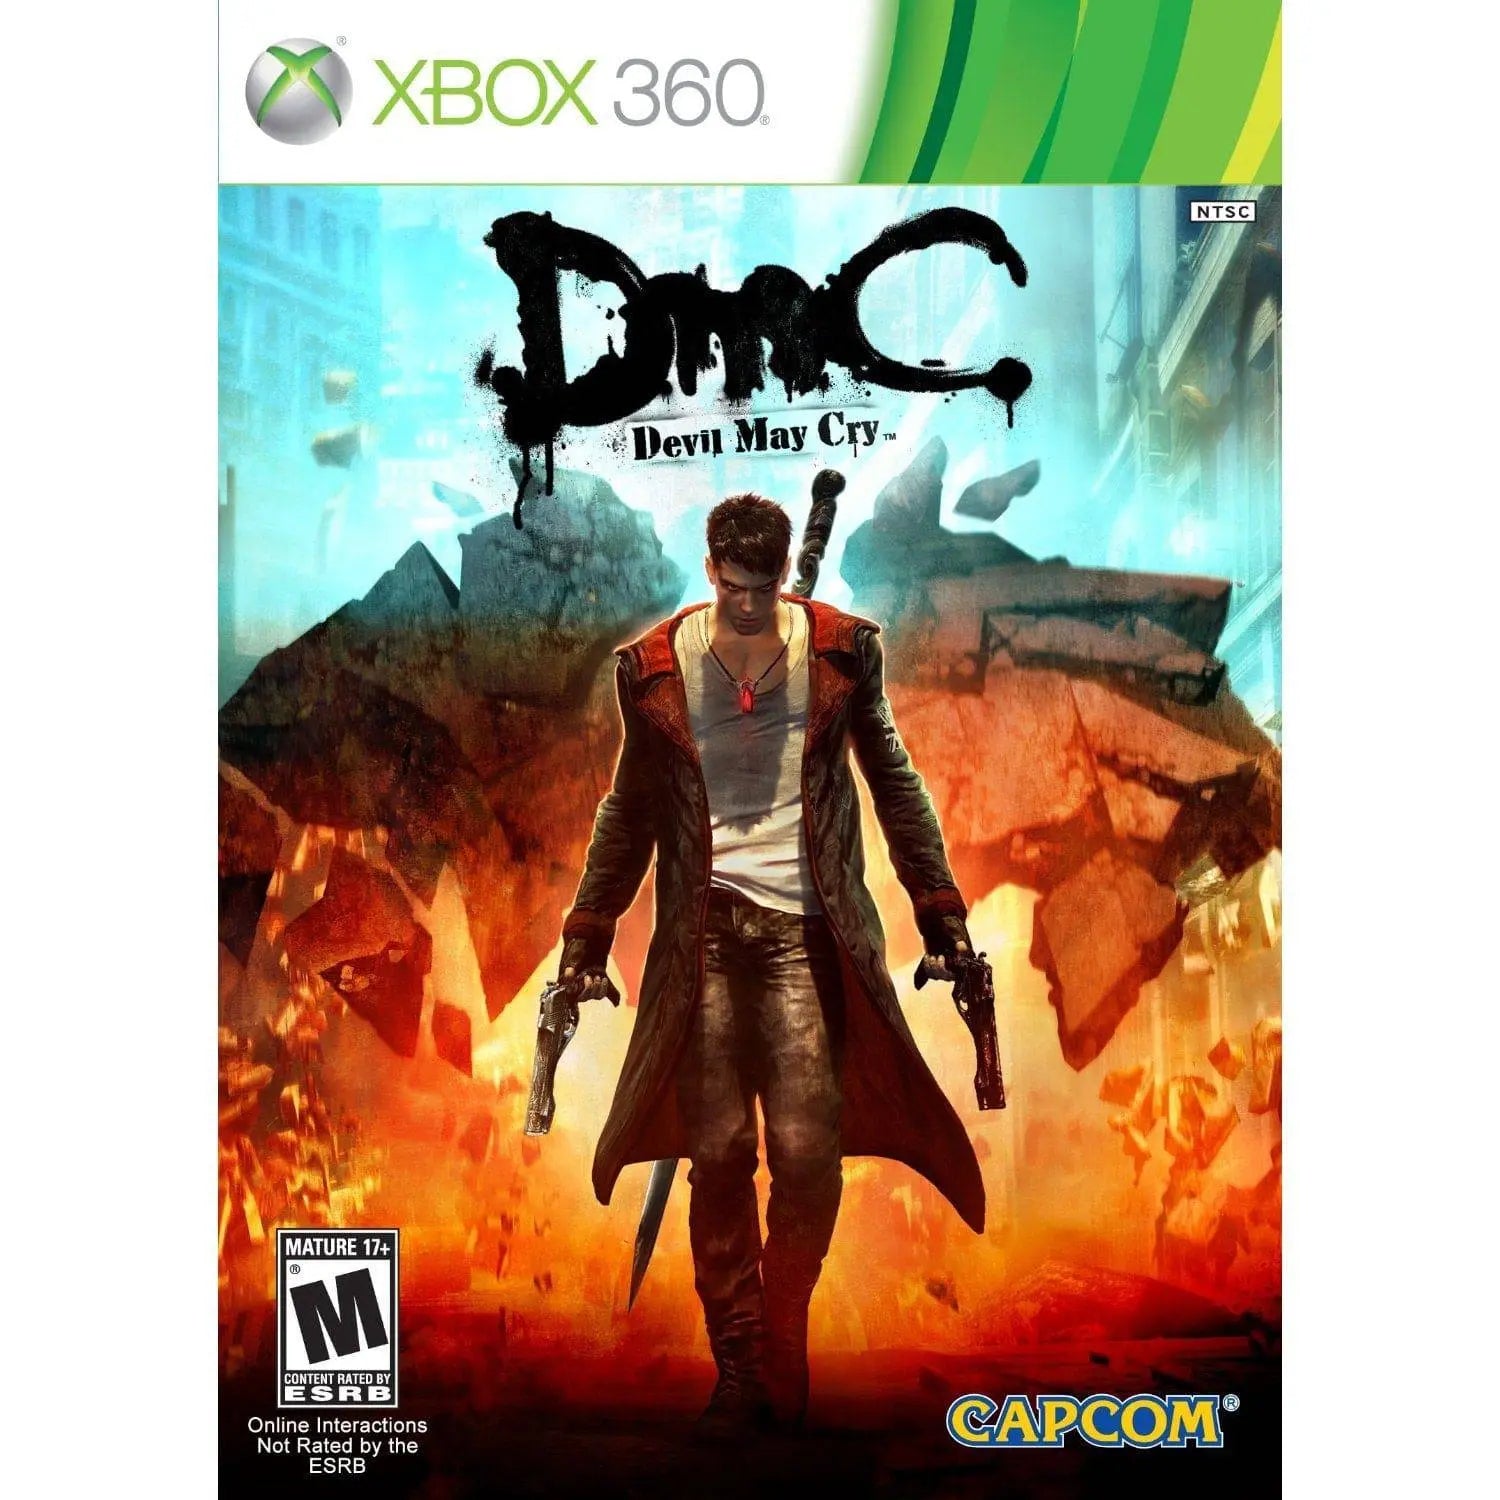 DMC: Devil May Cry Xbox 360 - USED COPY King Gaming